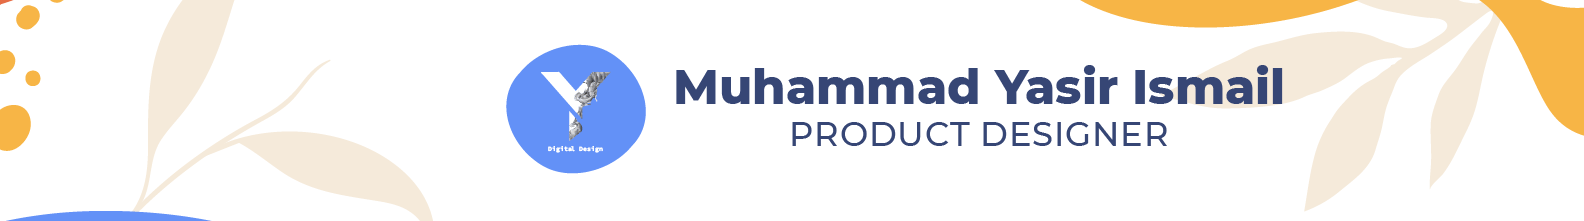 Muhammad Yasir Ismail's profile banner